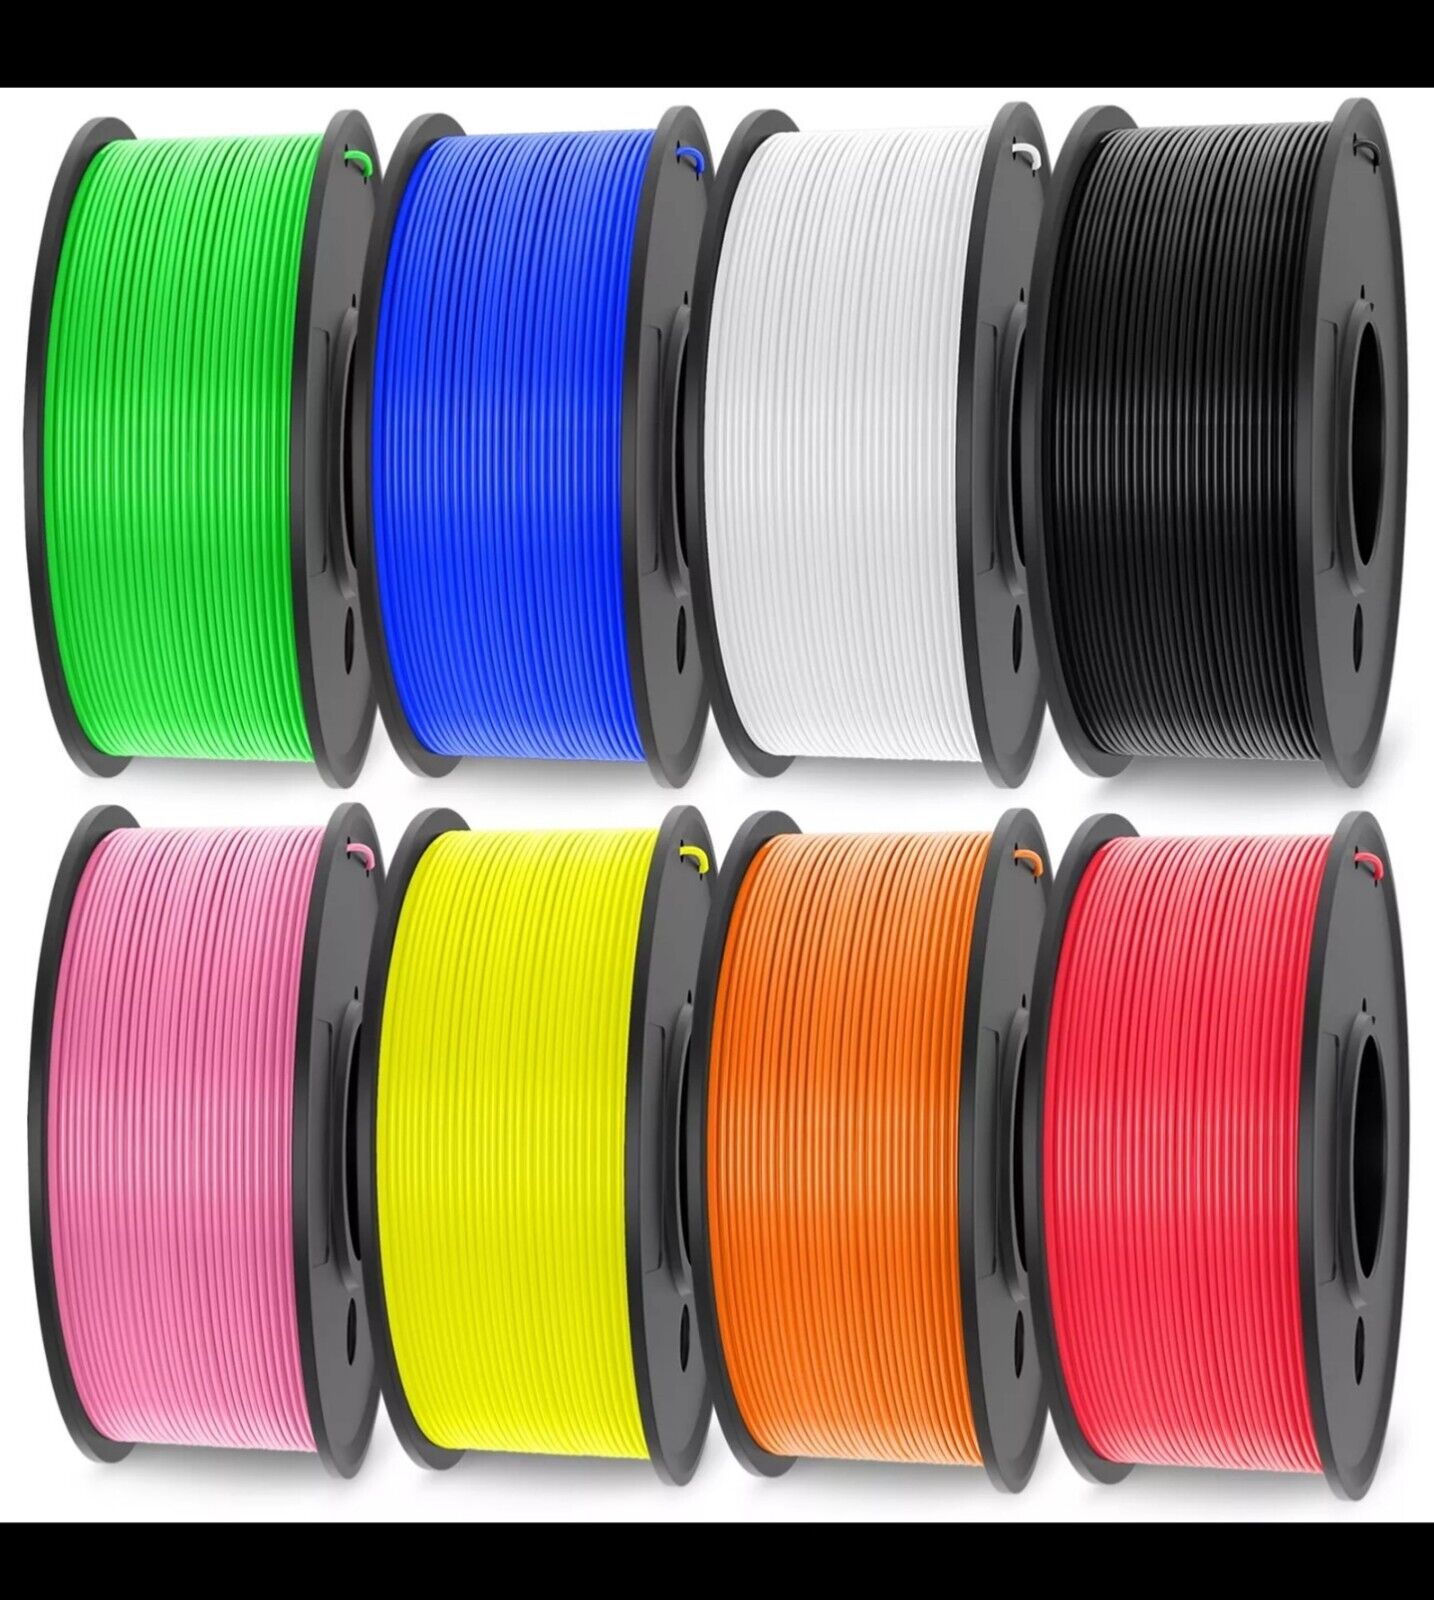 SUNLU 3D Printer Filament Bundle Multicolor PETG Filament 1.75mm, Individually